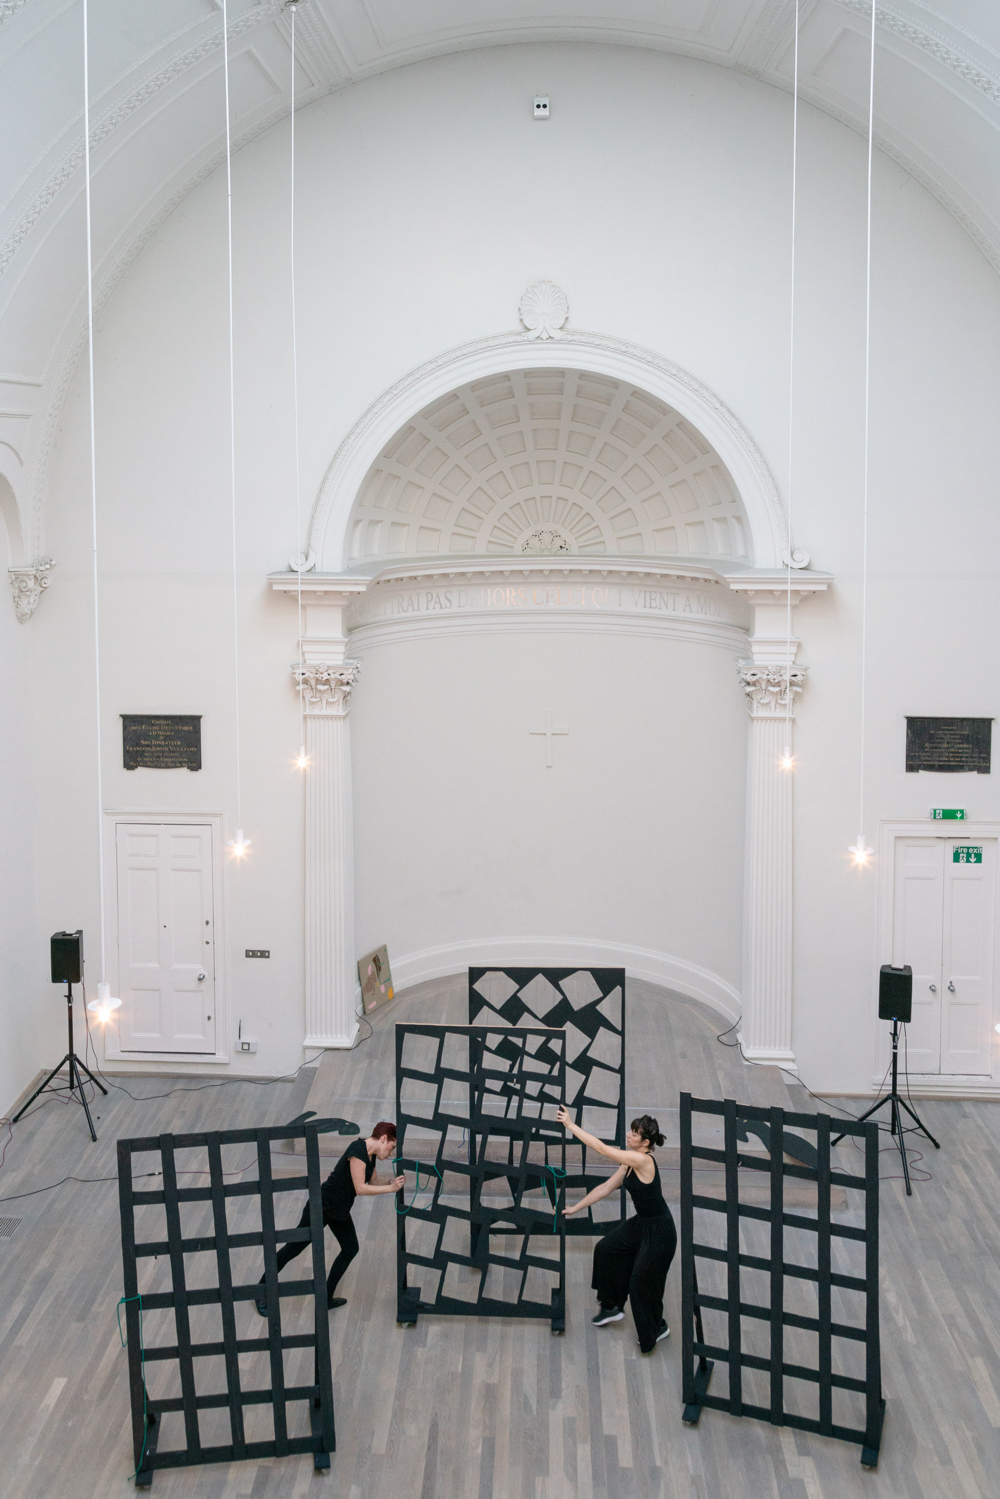 Melissa Gordon, 2018, performance “Collision" with Rita Pulga and Julieta Kigelmann, The Swiss Church in London. Photograph by Sam Nightingale